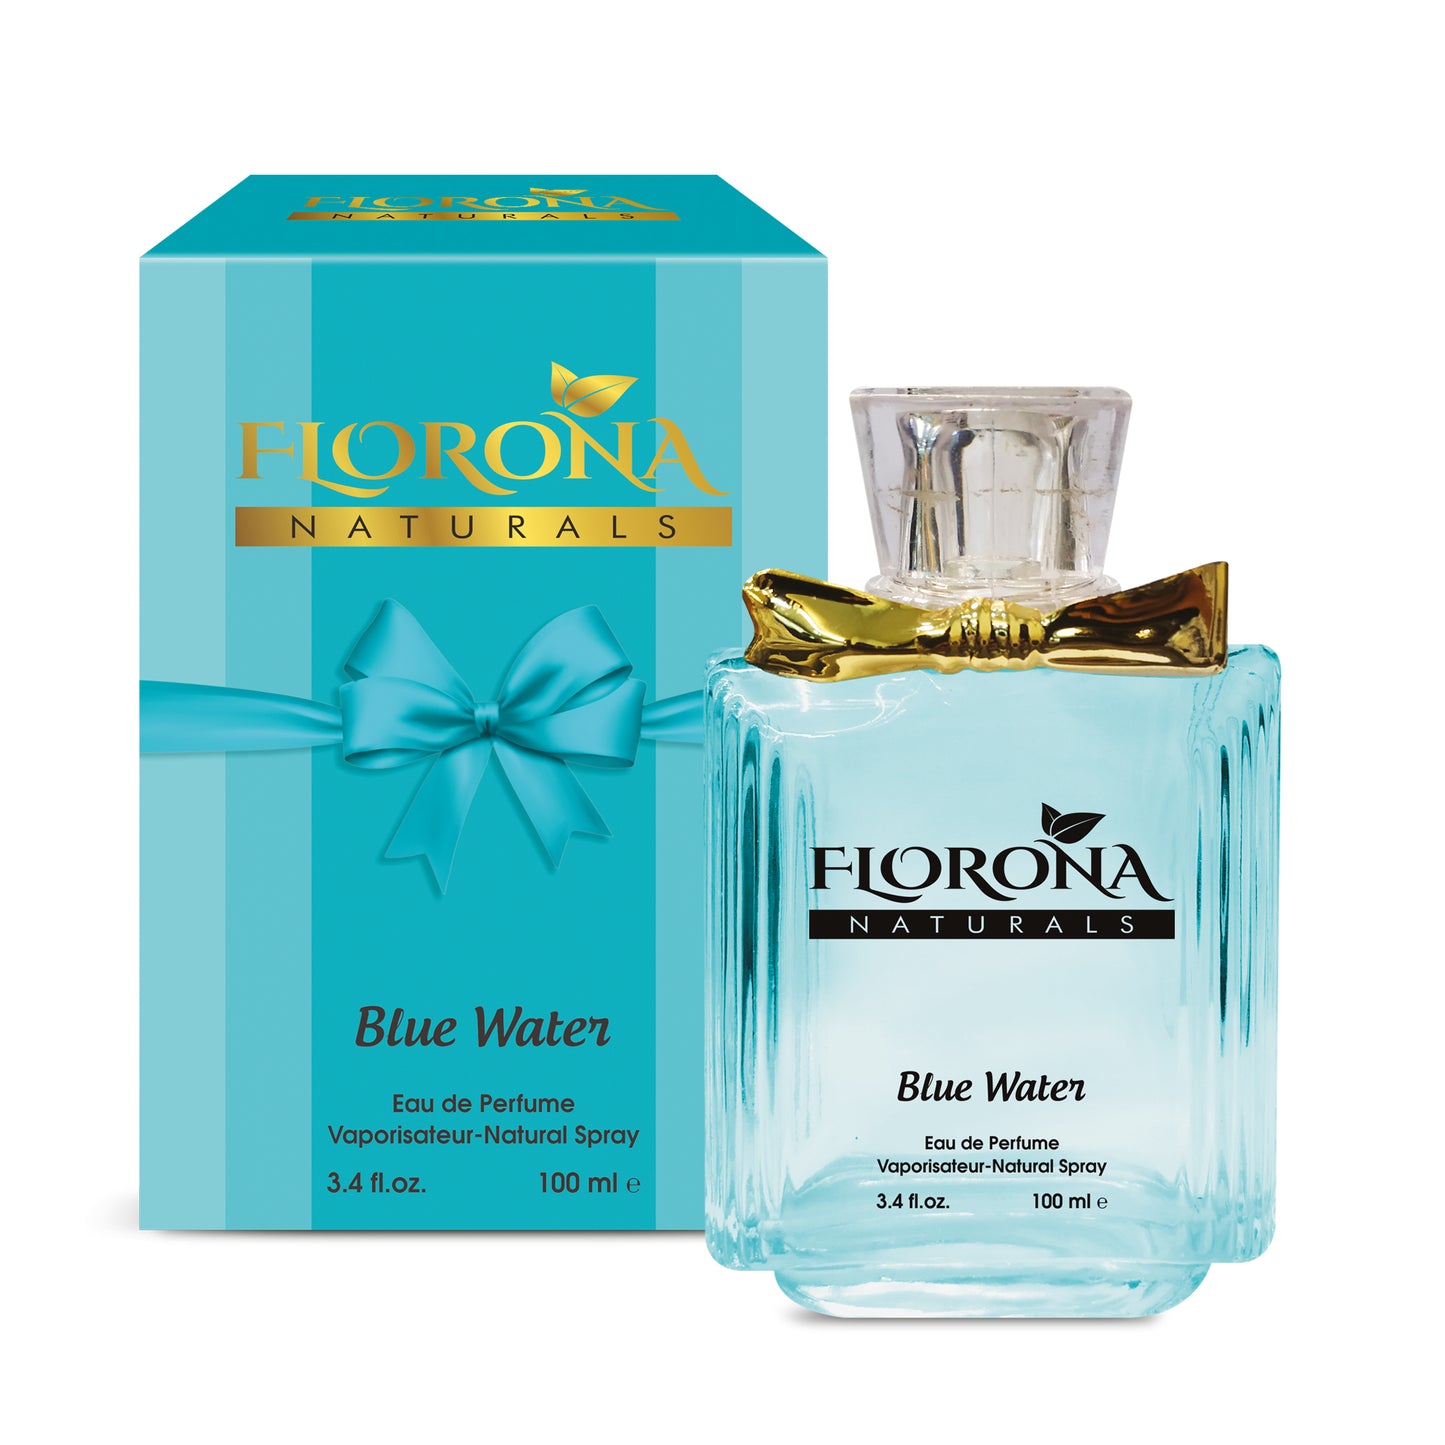 Florona Naturals Blue Water Eau De perfume 100ml